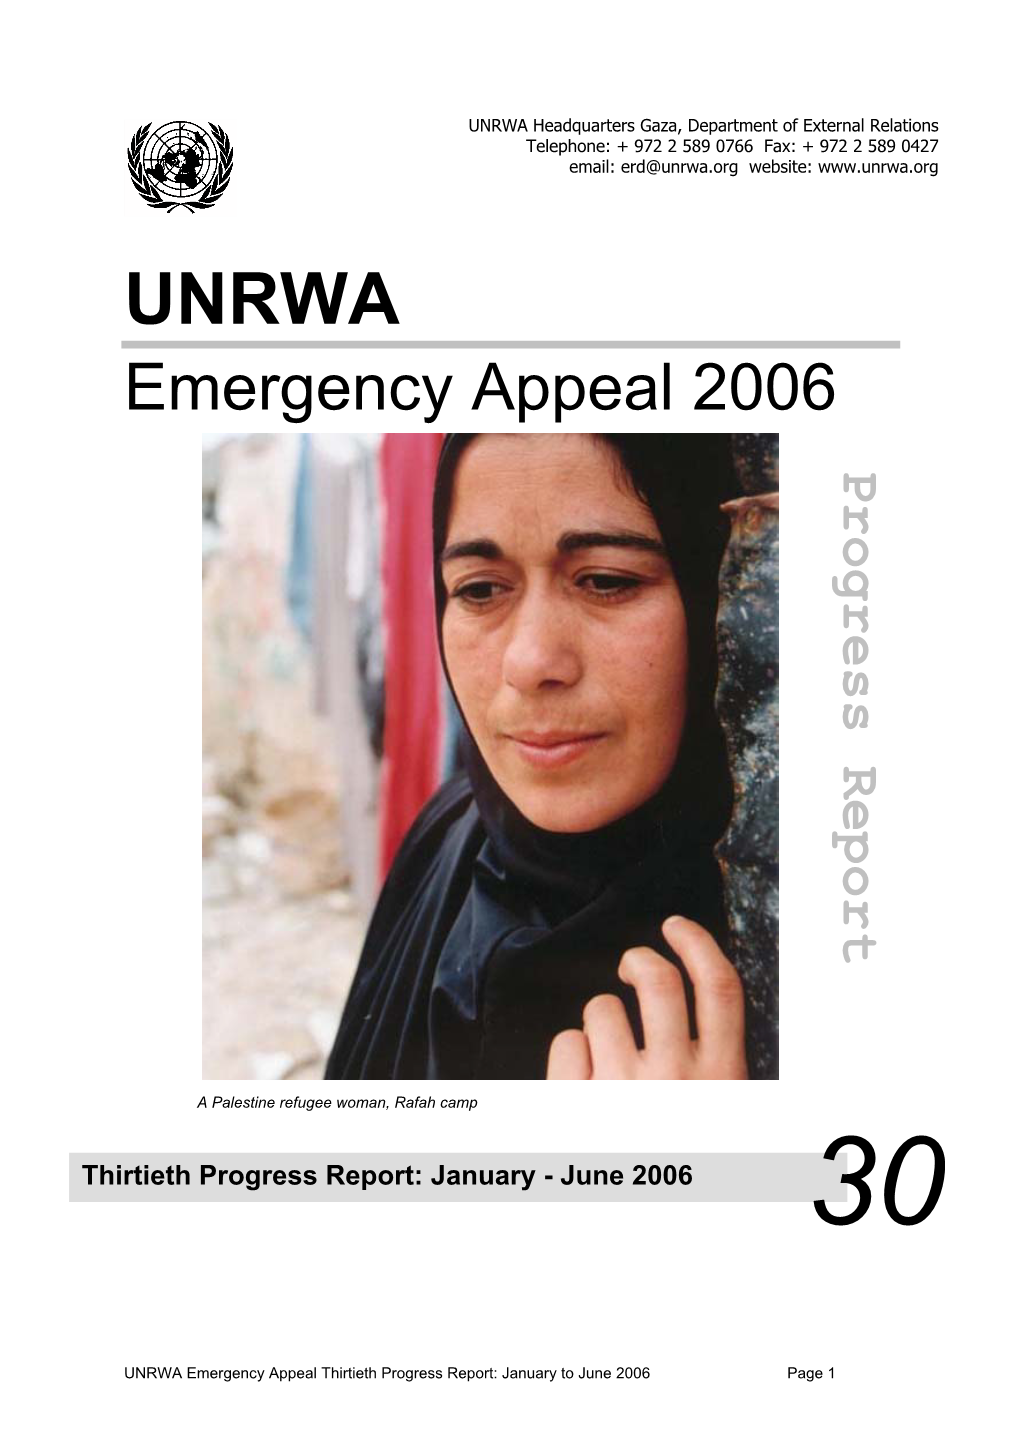 UNRWA Headquarters Gaza, Department of External Relations Telephone: + 972 2 589 0766 Fax: + 972 2 589 0427 Email: Erd@Unrwa.Org Website